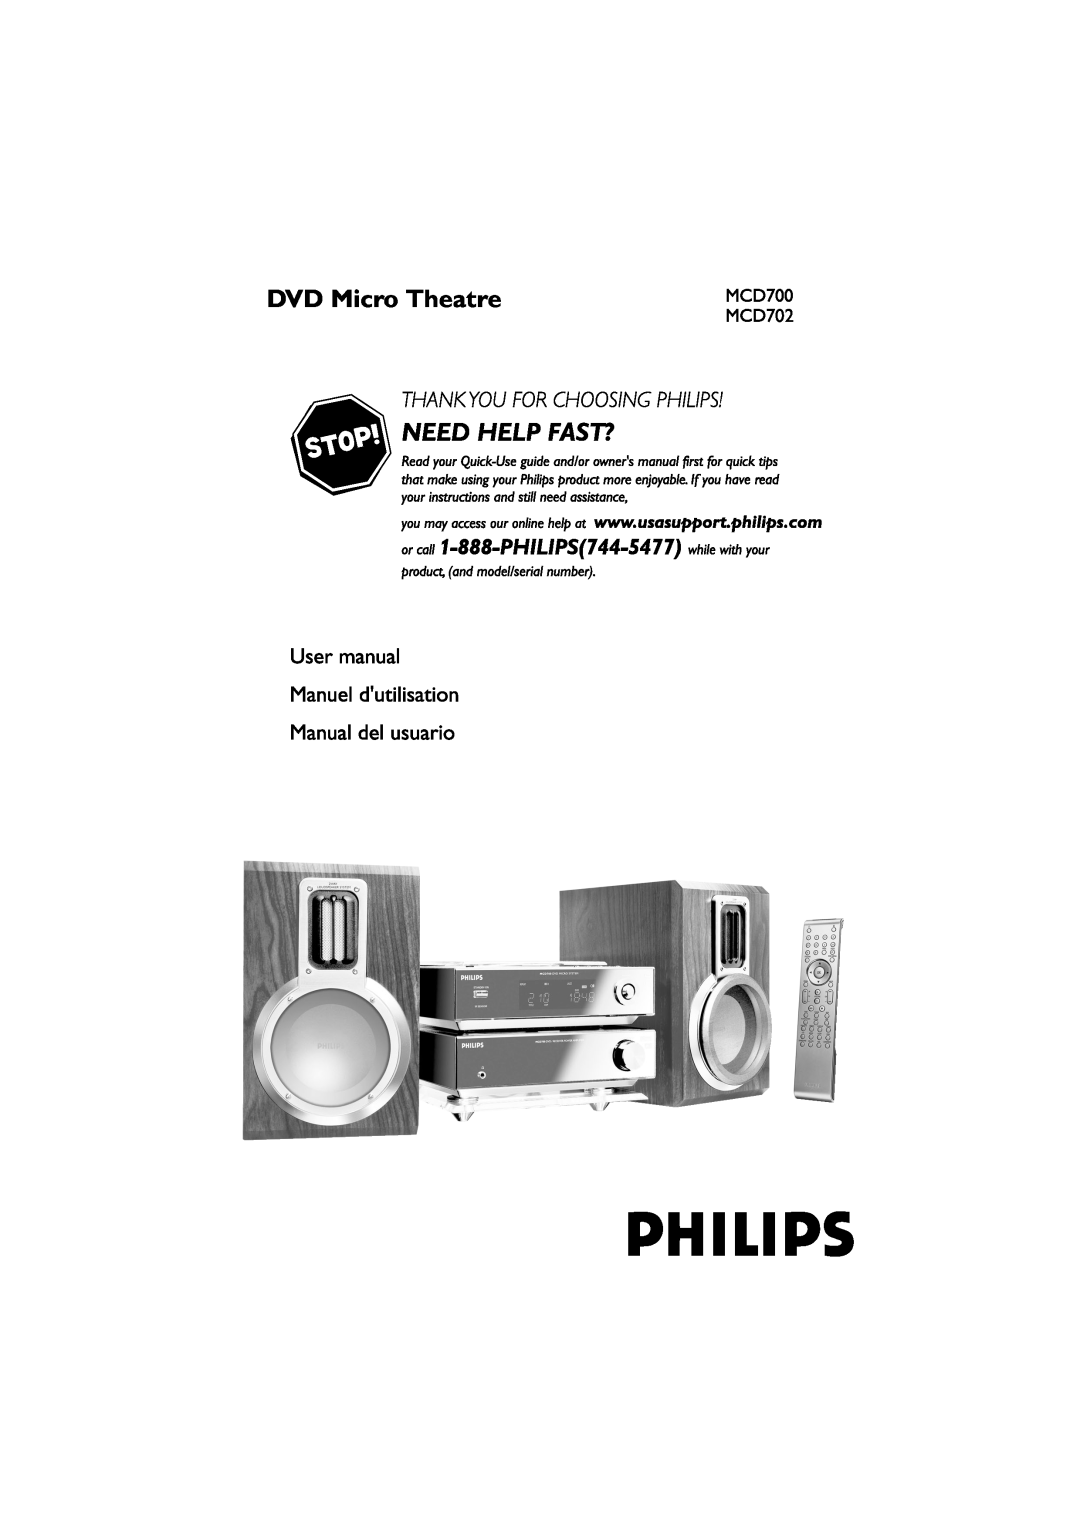 Philips MCD702, MCD700 manual DVD Micro Theatre 